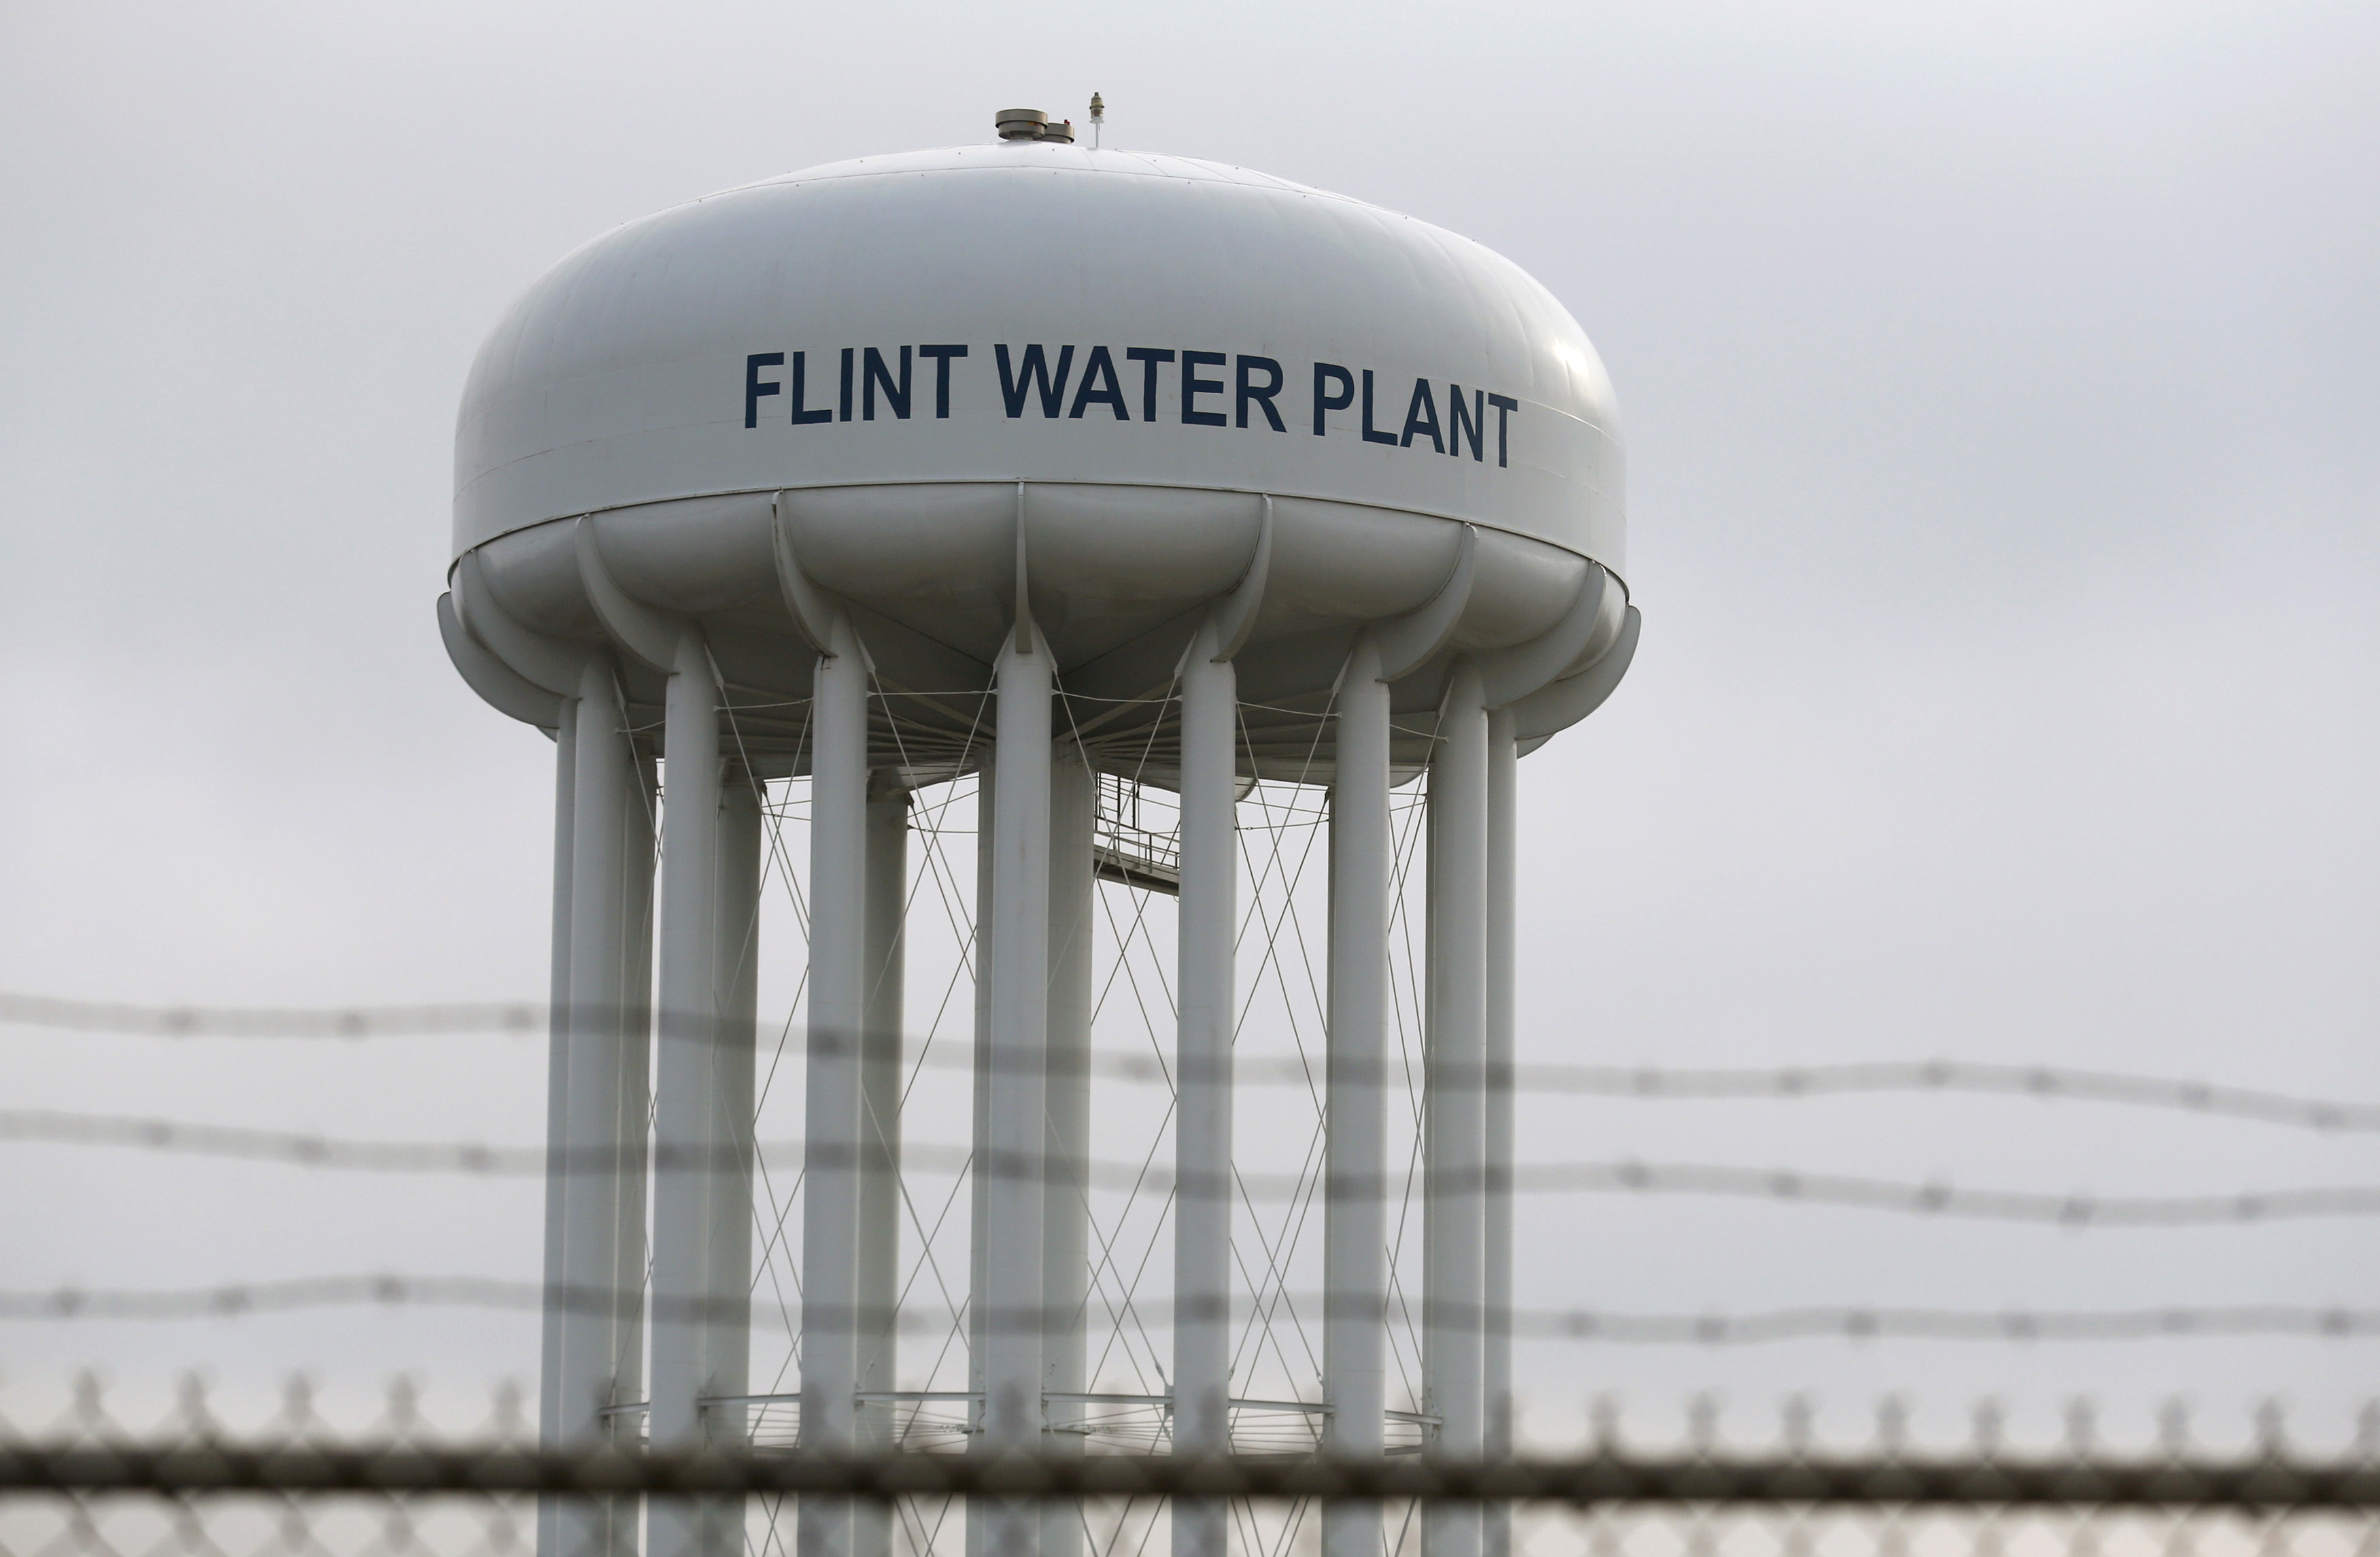 The Flint Water Plant tower in Flint, Michigan